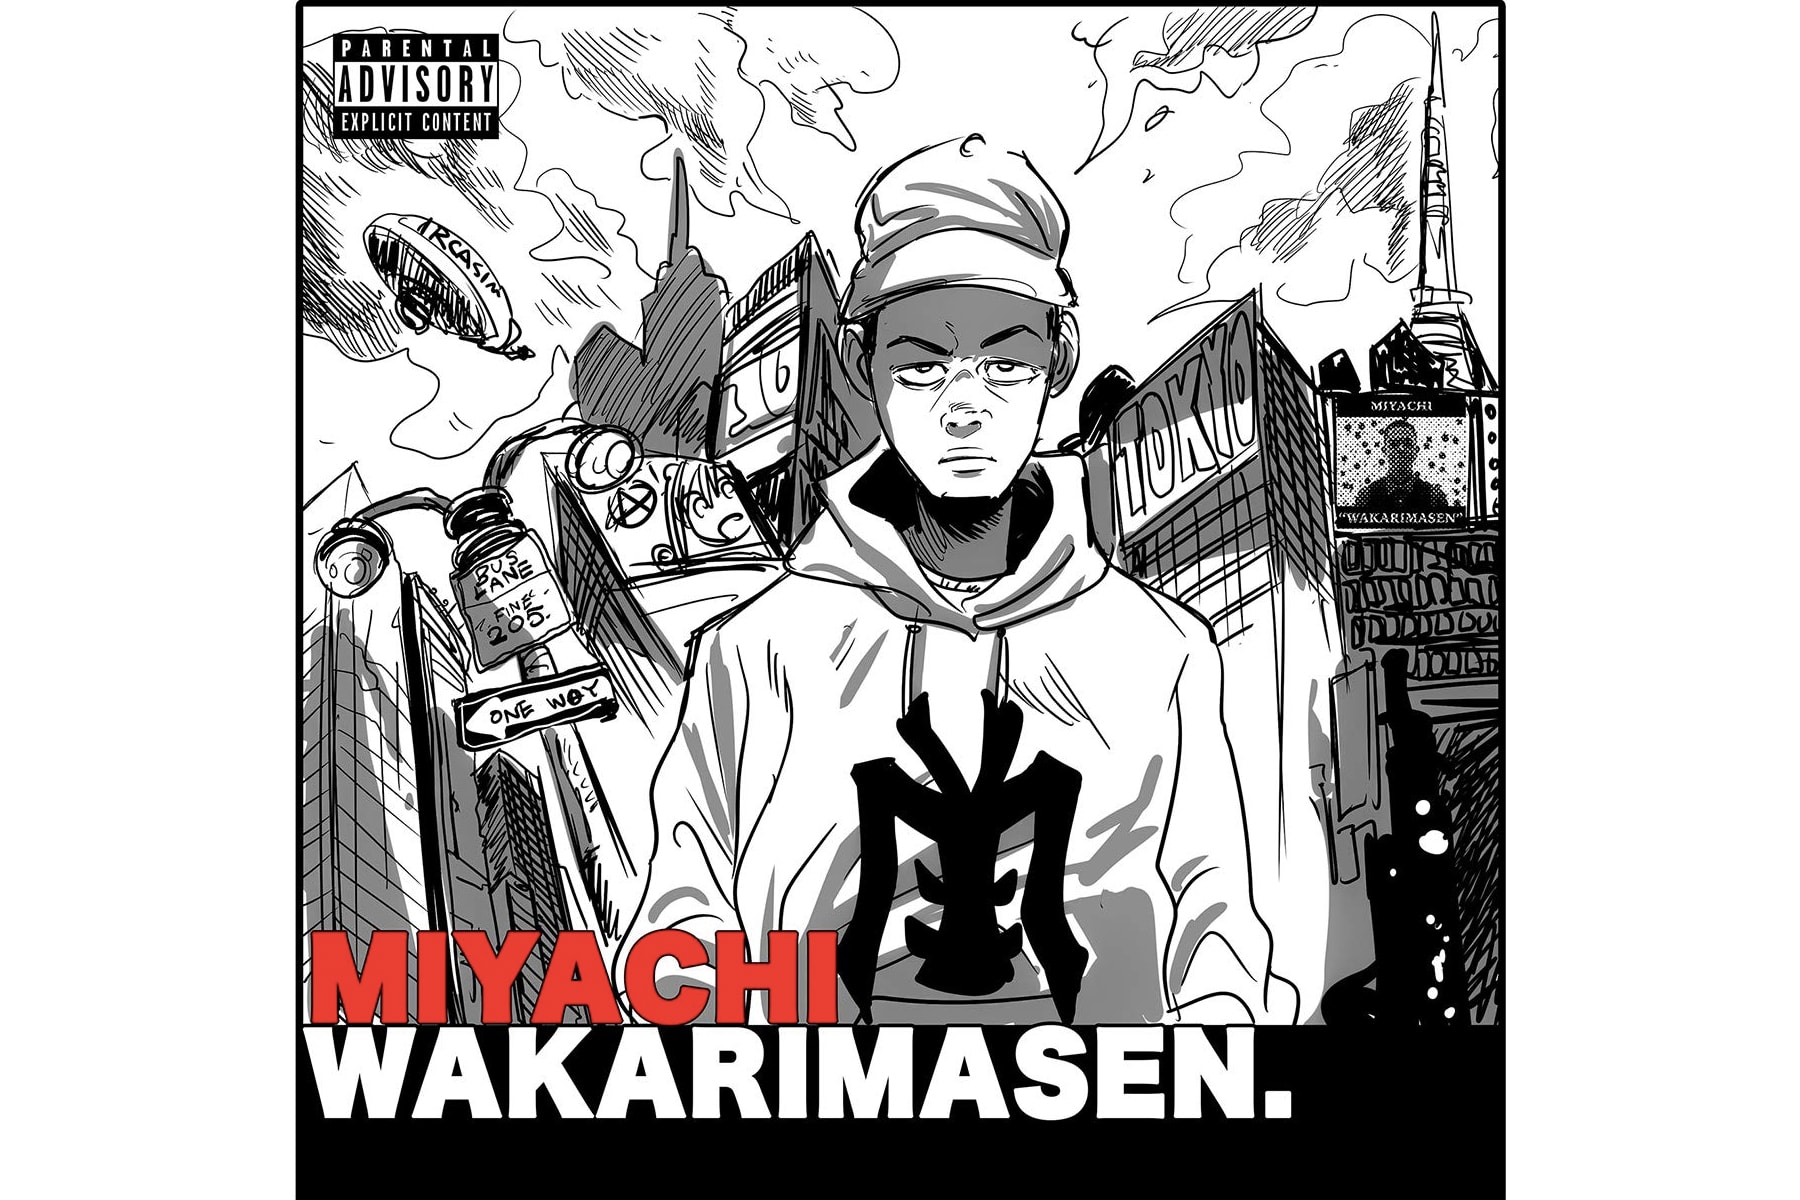 Miyachi Wakarimasen Debut Album Stream Japanese-American rapper hip-hop producer listen now spotify apple music jay park 